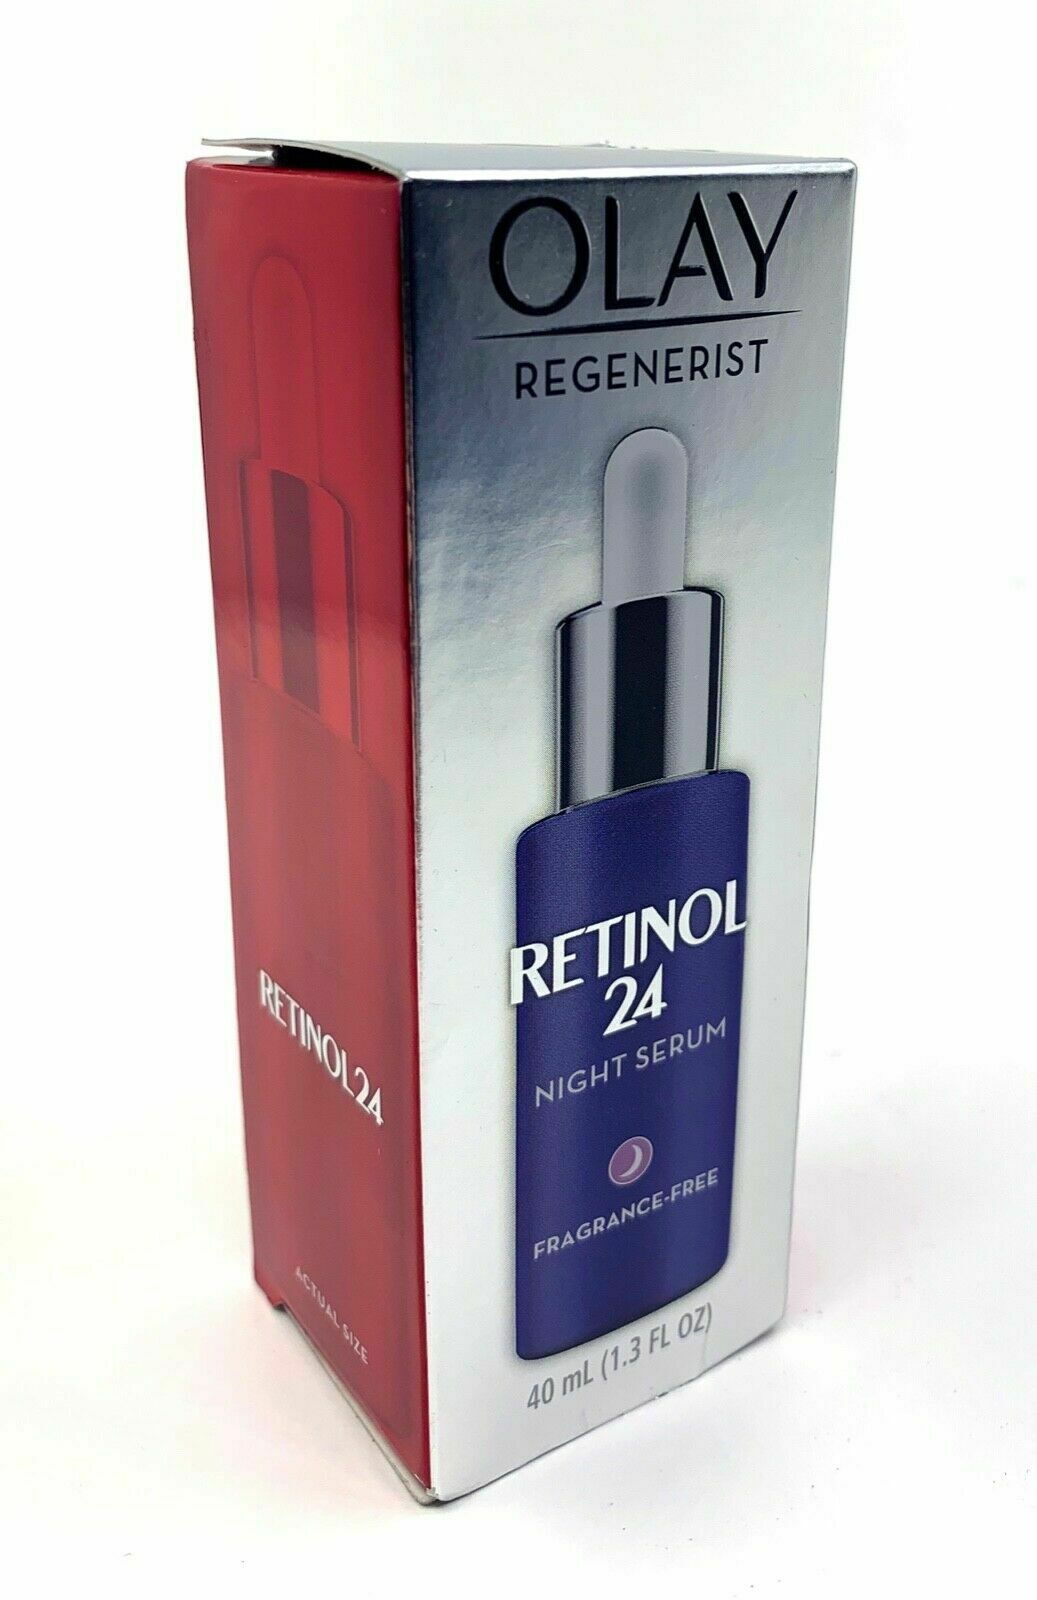 Olay Regenerist Retinol 24 Night Serum Fragrance Free 40 mL 1.3 OZ #8175 - $17.99